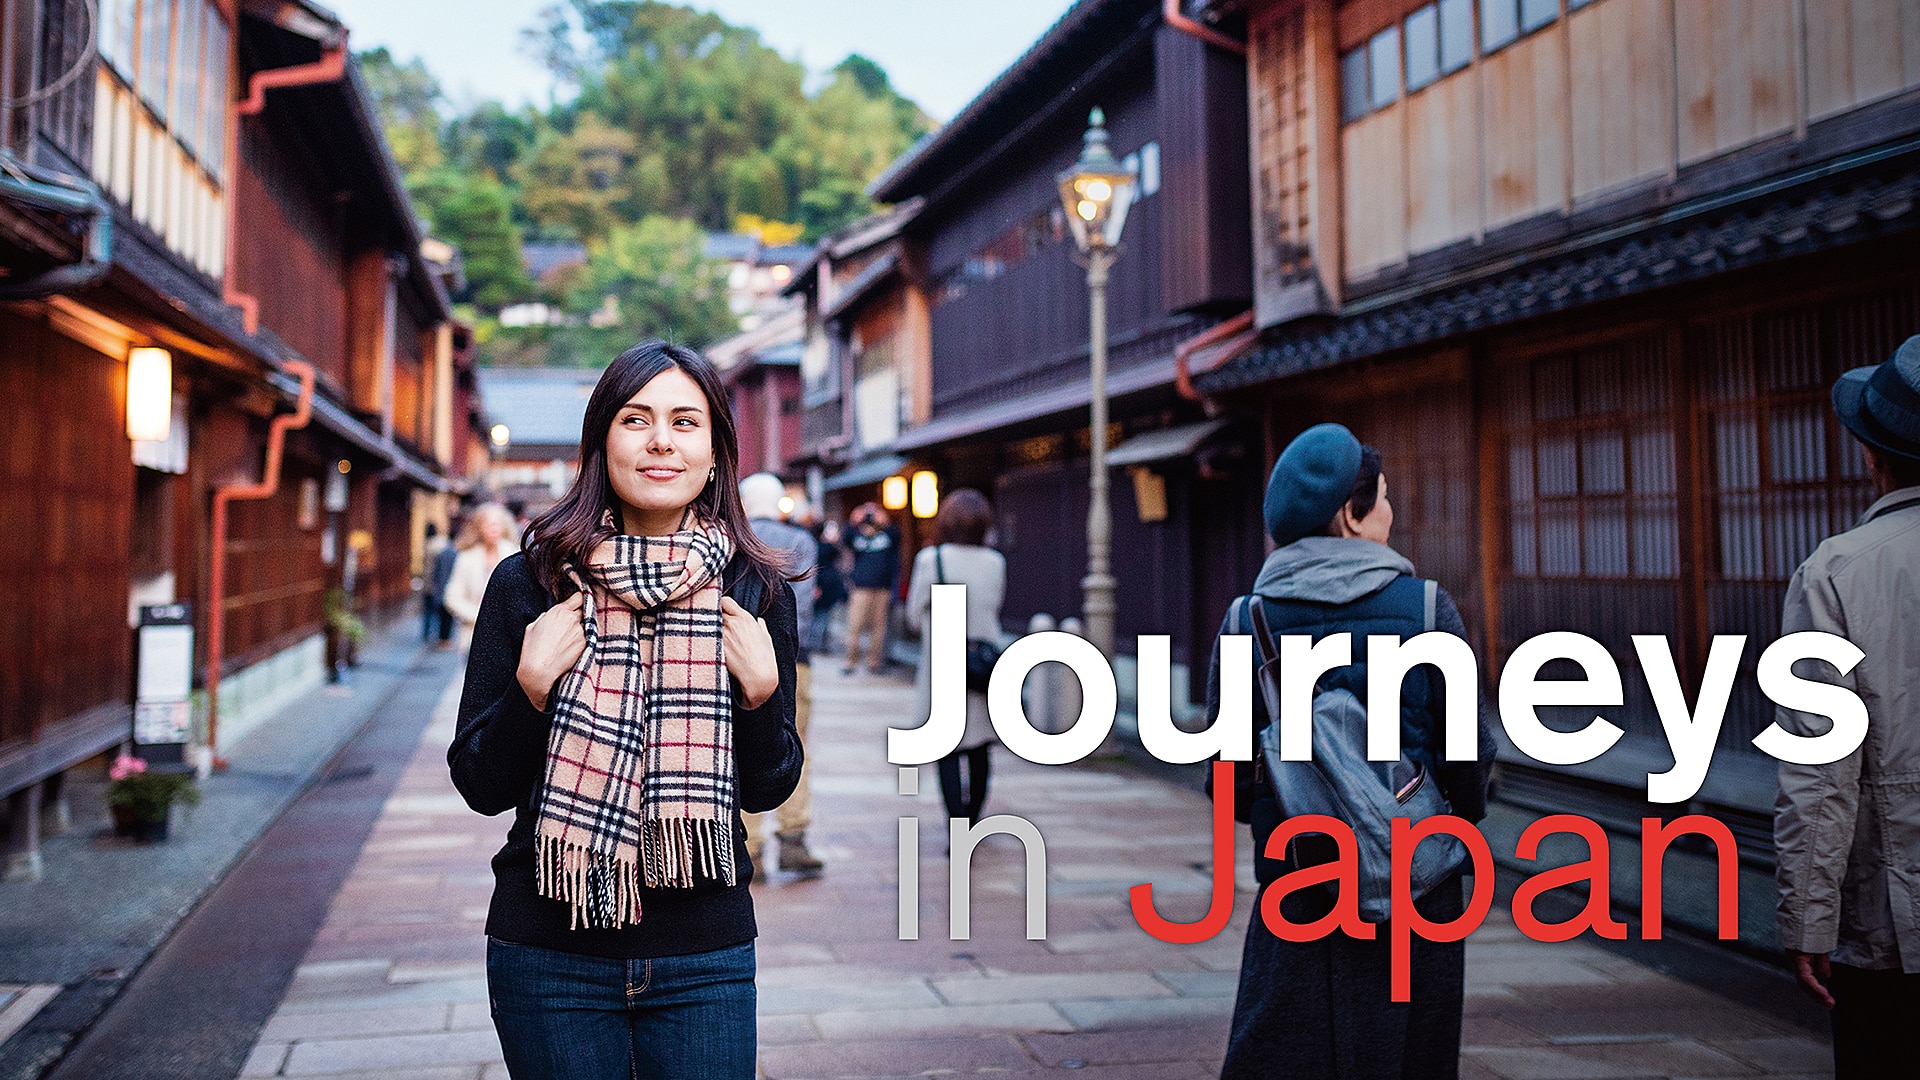 charles glover journeys in japan